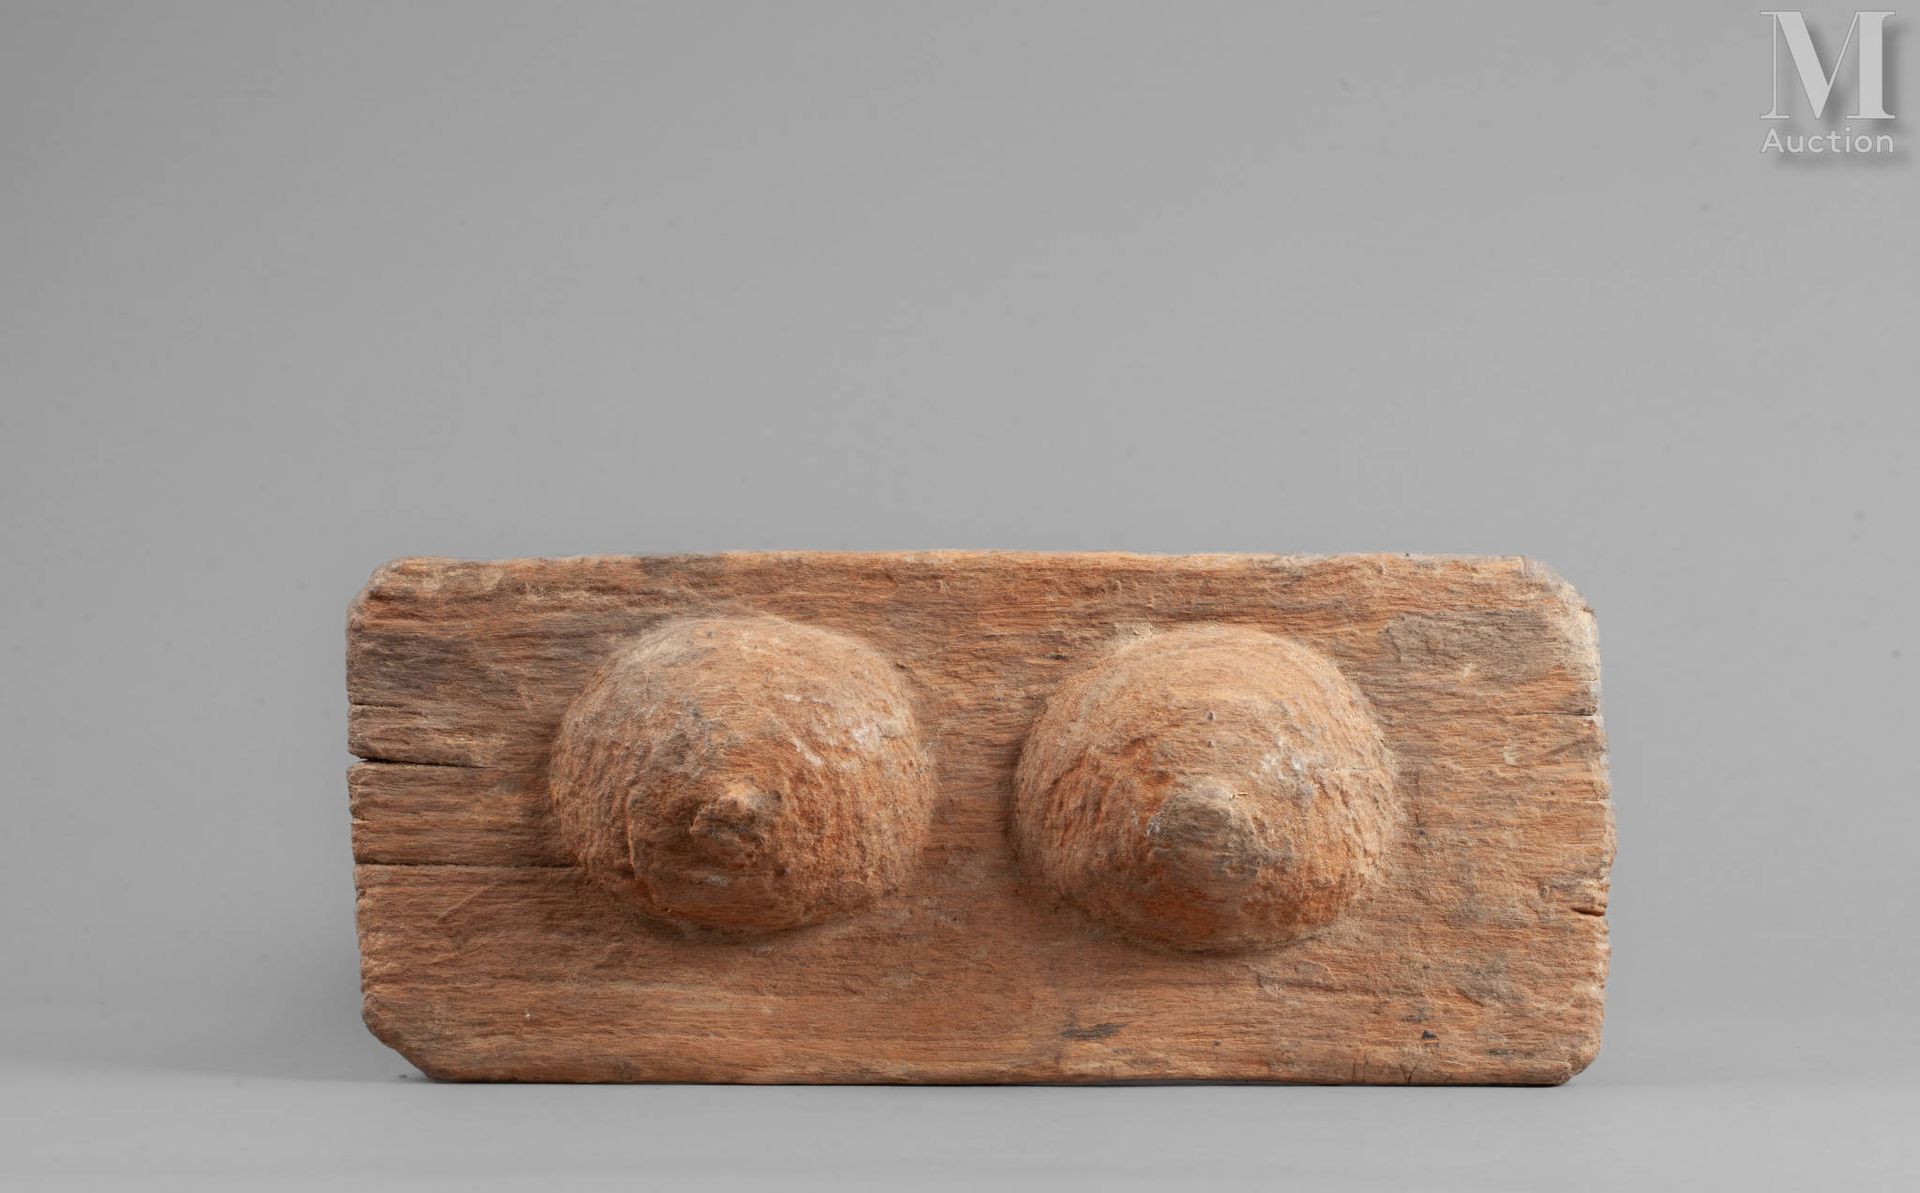 Ornement de temple 浮雕的两个乳房与生育概念有关 
木材、古老的侵蚀和岁月的痕迹 
尼泊尔
44.5 x 19 厘米